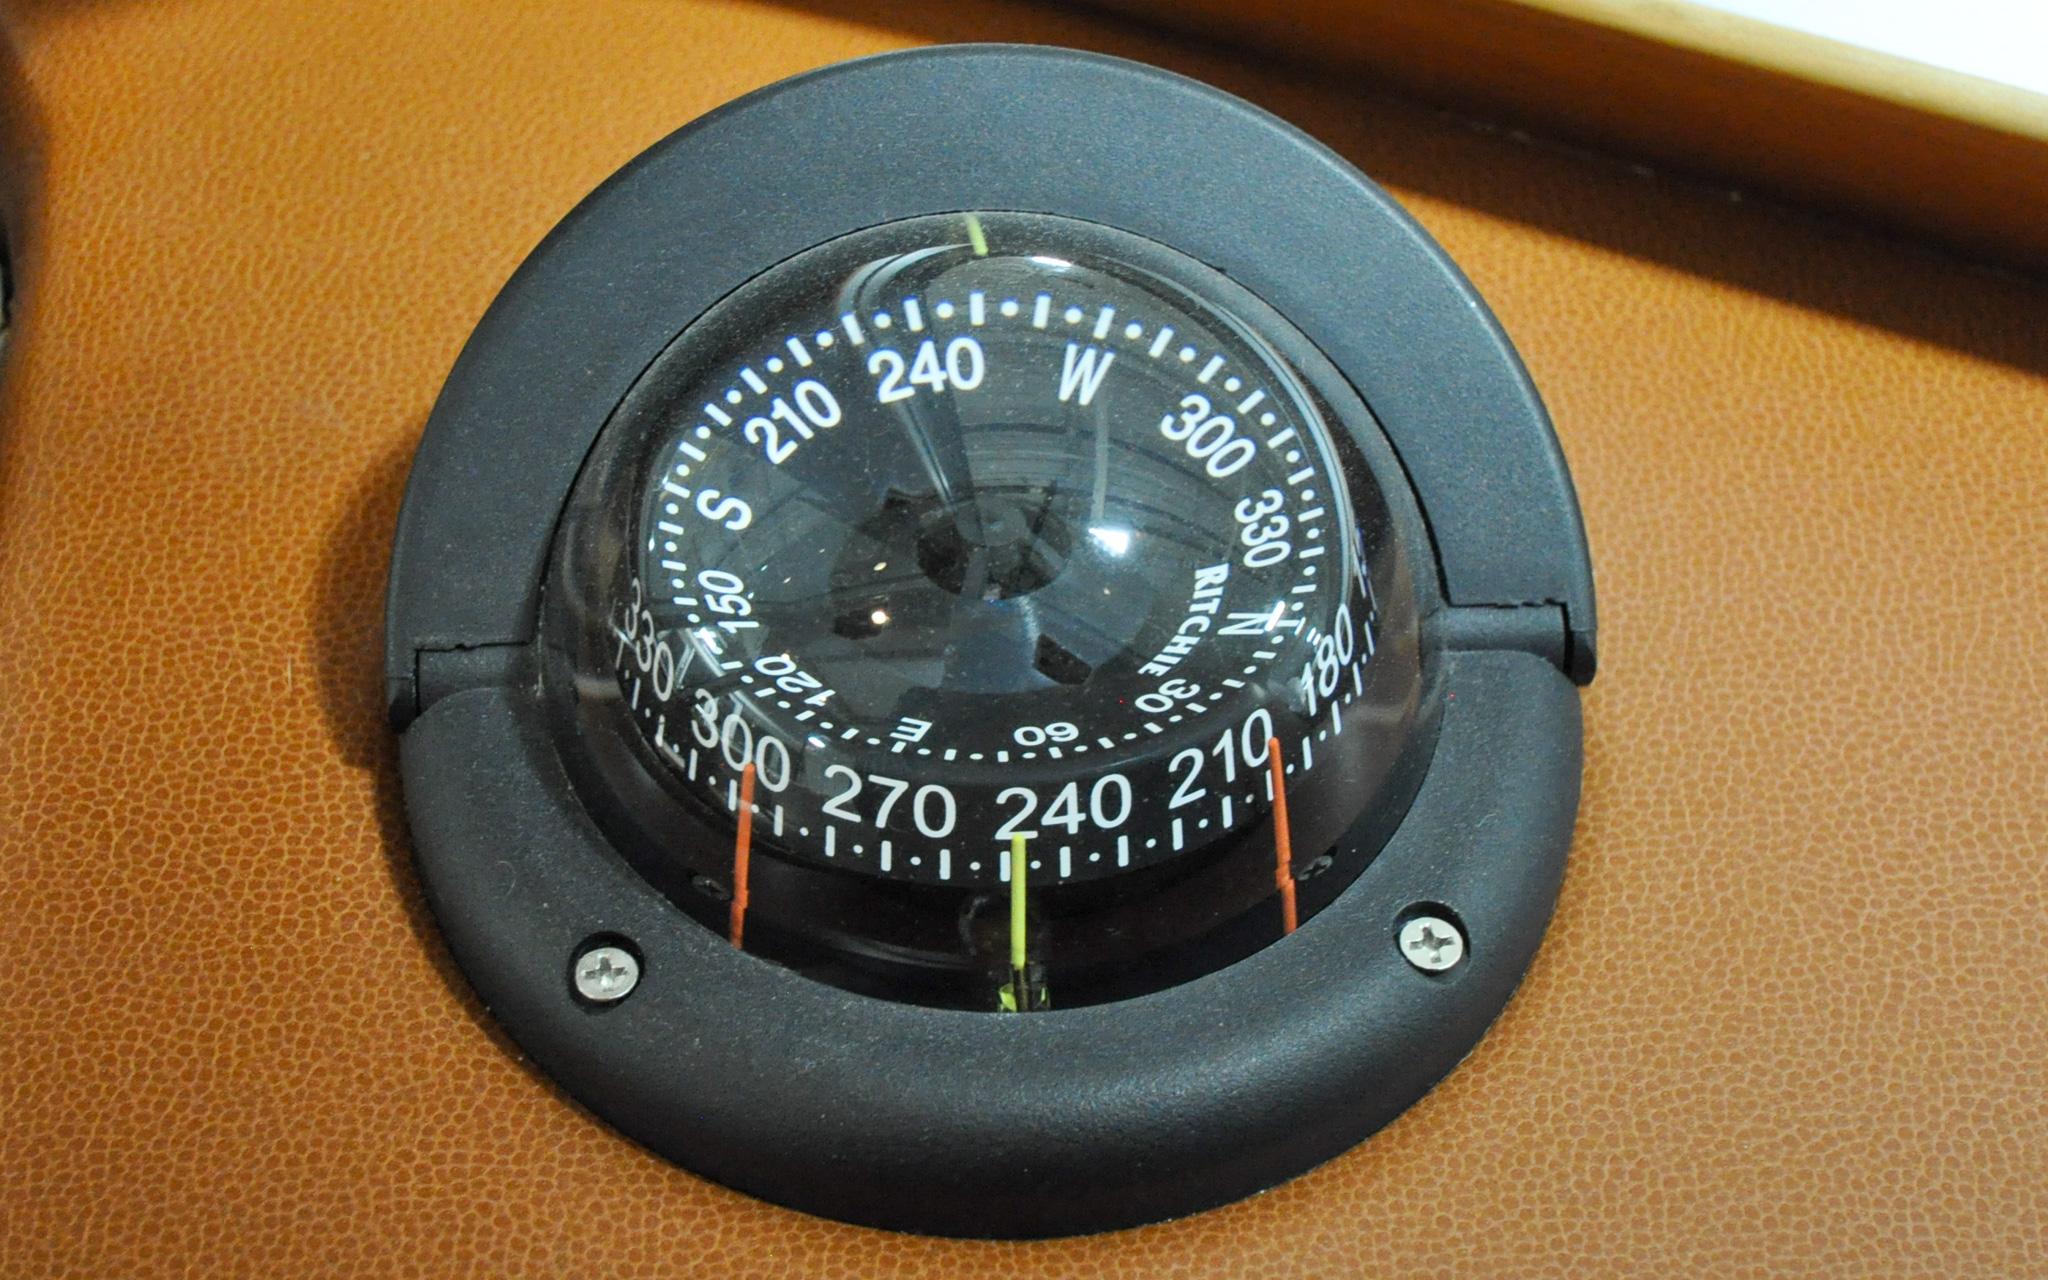 Sabre 38 Salon Express - Knot Done Yet - Pilot Salon - Helm Station - Ships Compass